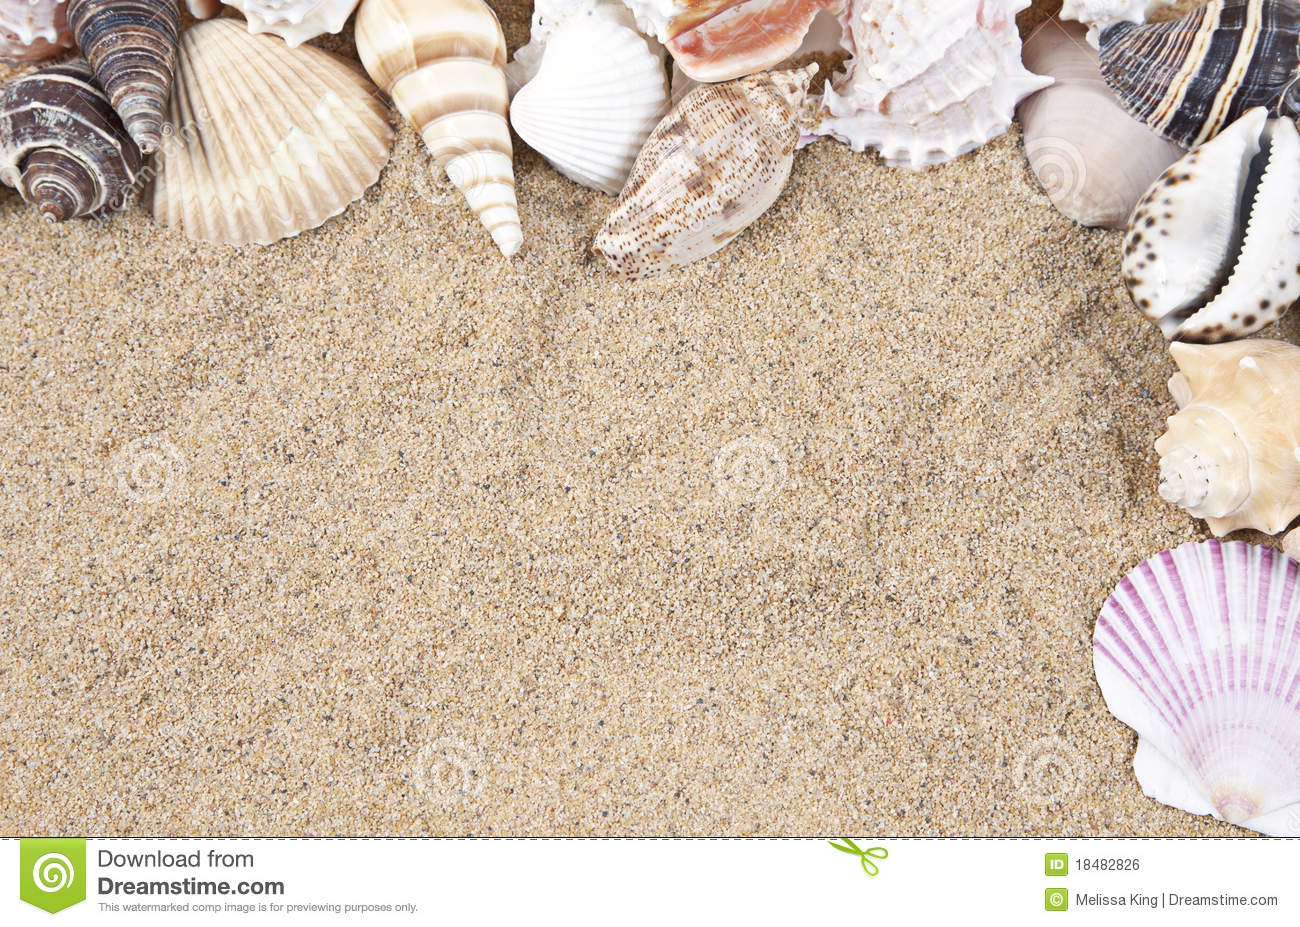 Seashells And Sand Border Royalty Free Stock Image   Image  18482826